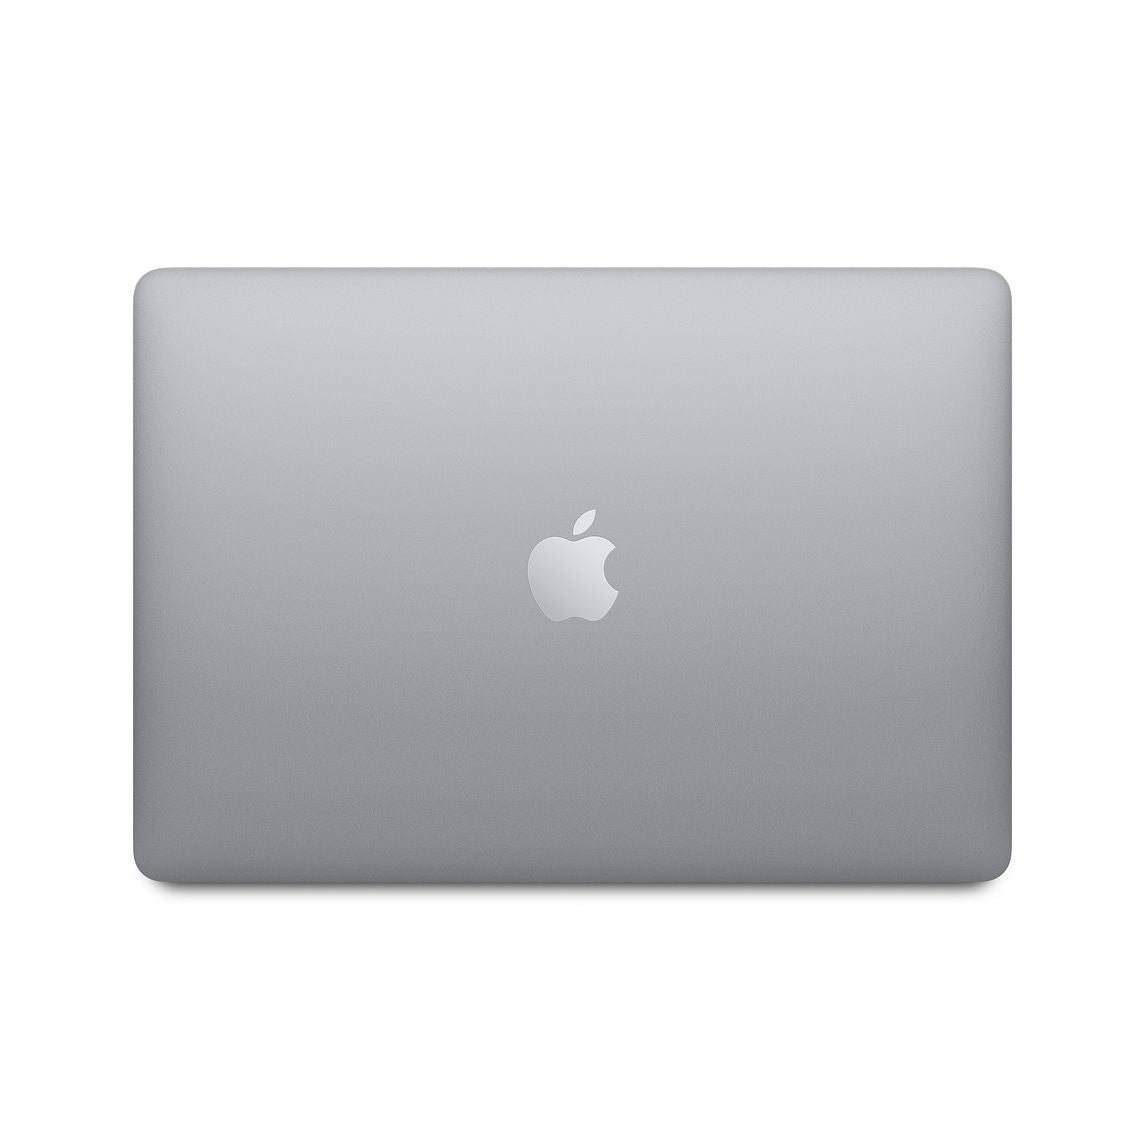 Macbook Air Retina - 2020 - i3 - 8GB - Space Grey